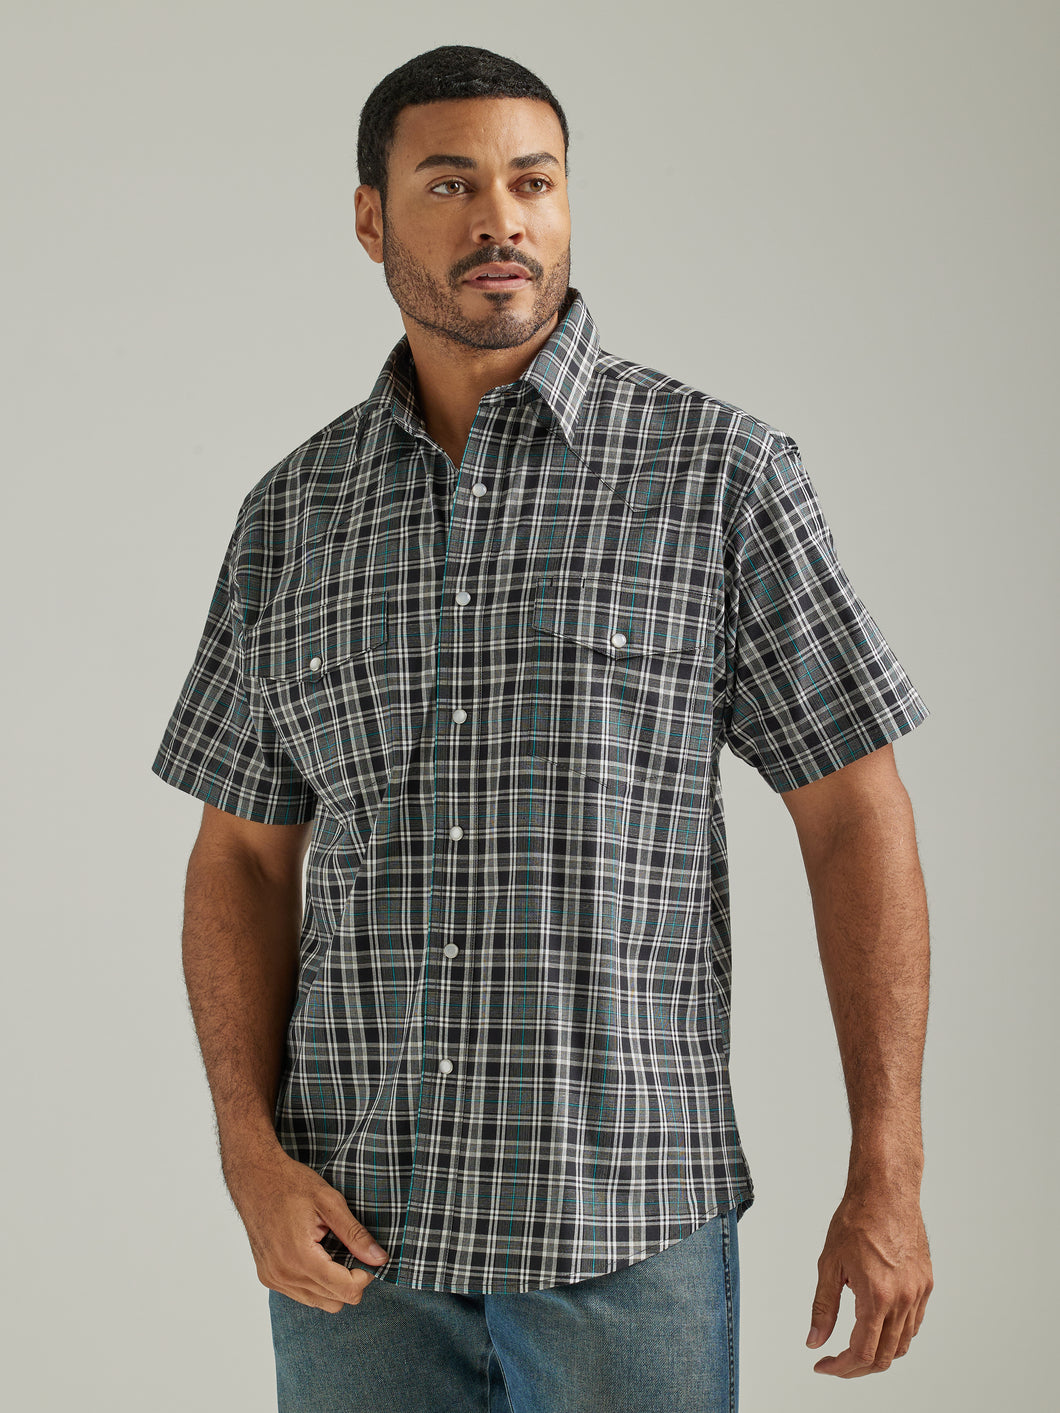 Pard's Western Shop Wrangler Men's Wrinkle Resist Black/White Plaid Short Sleeve Snap Western Shirt